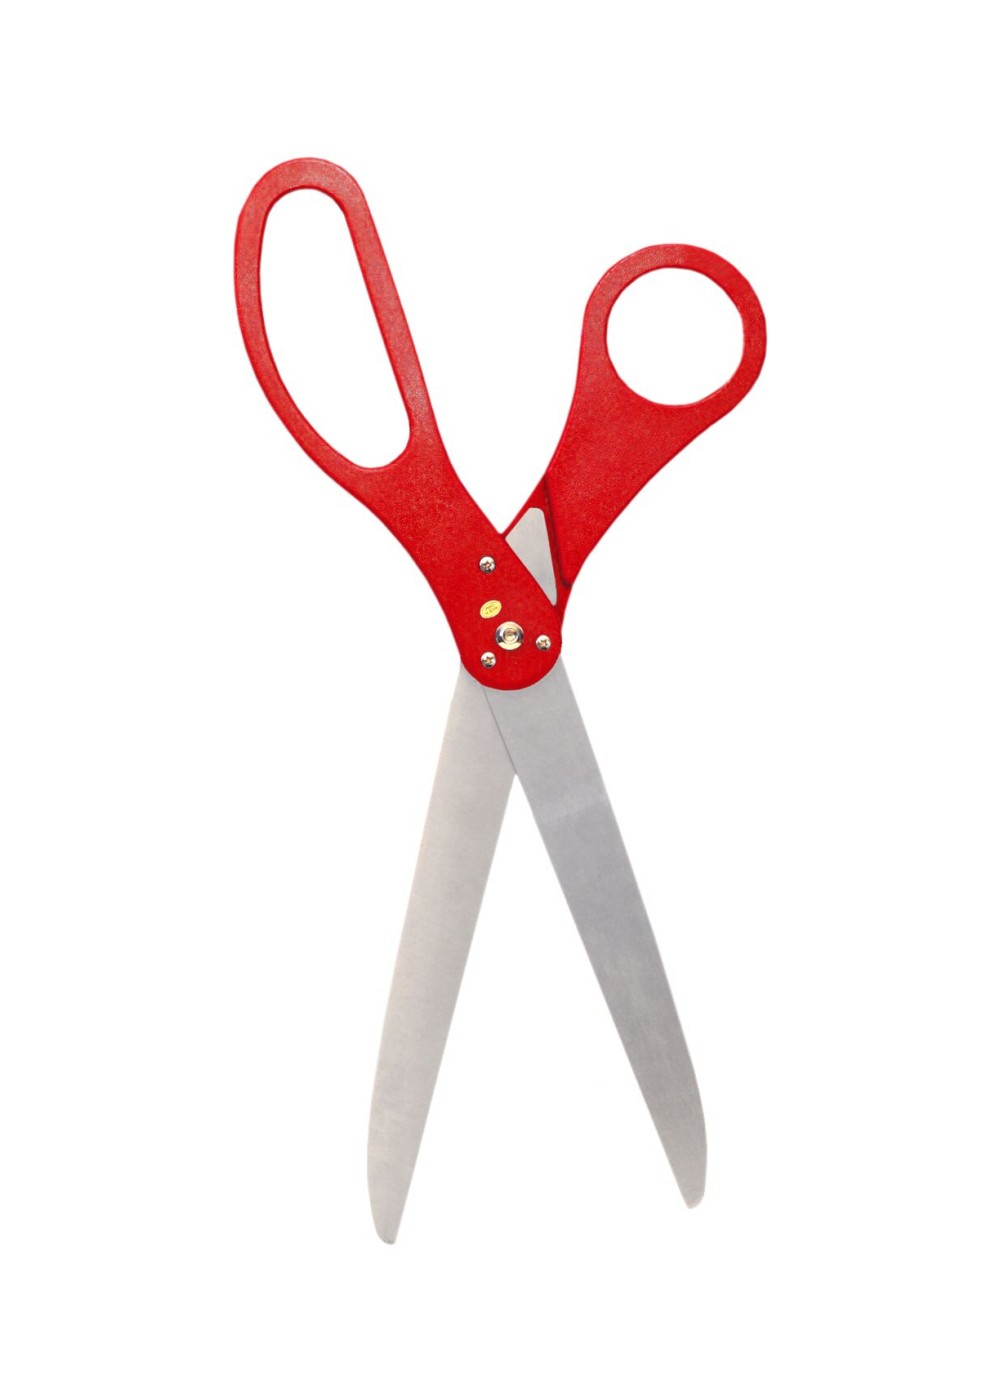 https://img.wondercostumes.com/products/16-3/giant-ceremonial-ribbon-cutting-scissors-red.jpg